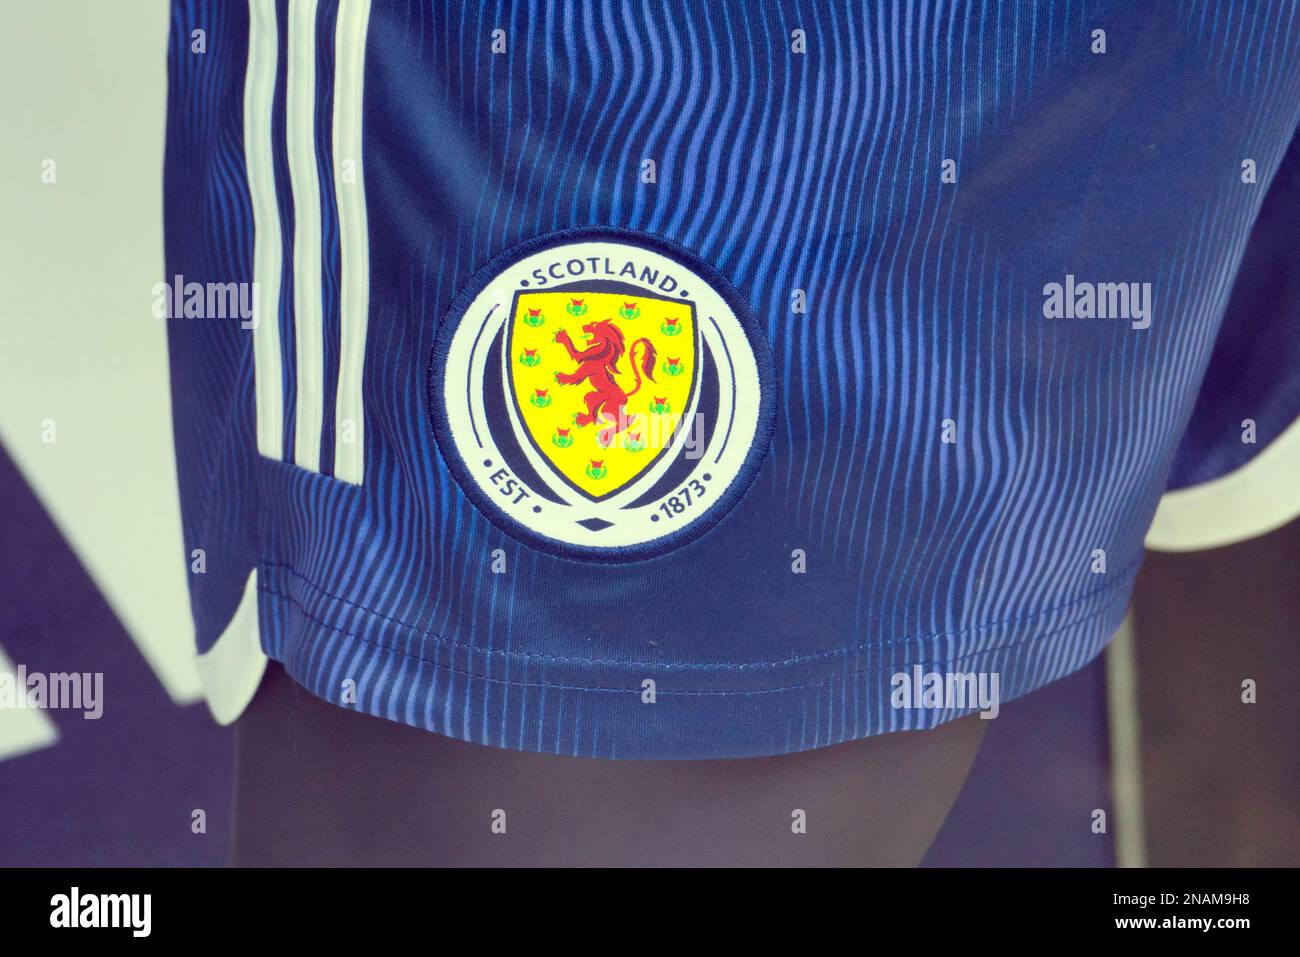 Scotland national football team shirt and badge Stock Photo